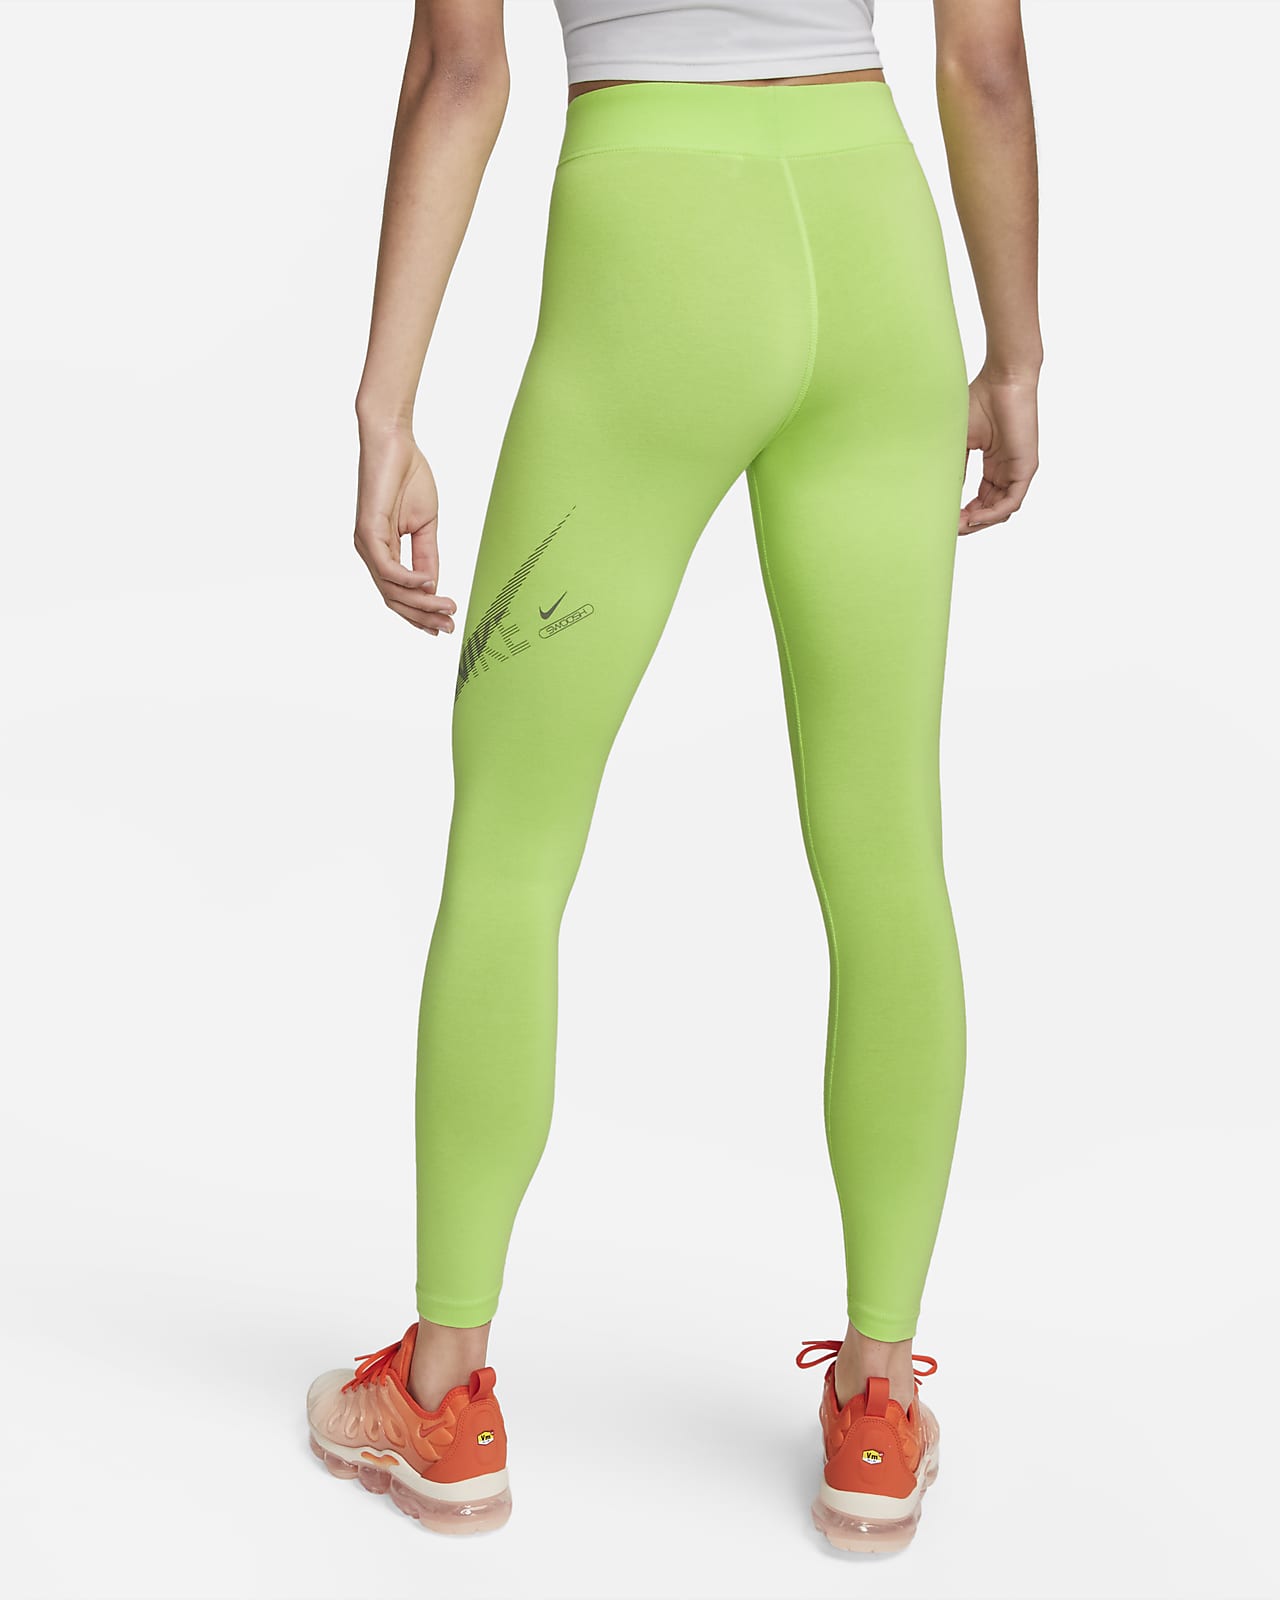 presidente Melodrama Oso polar Leggings de talle alto para mujer Nike Sportswear Swoosh. Nike.com